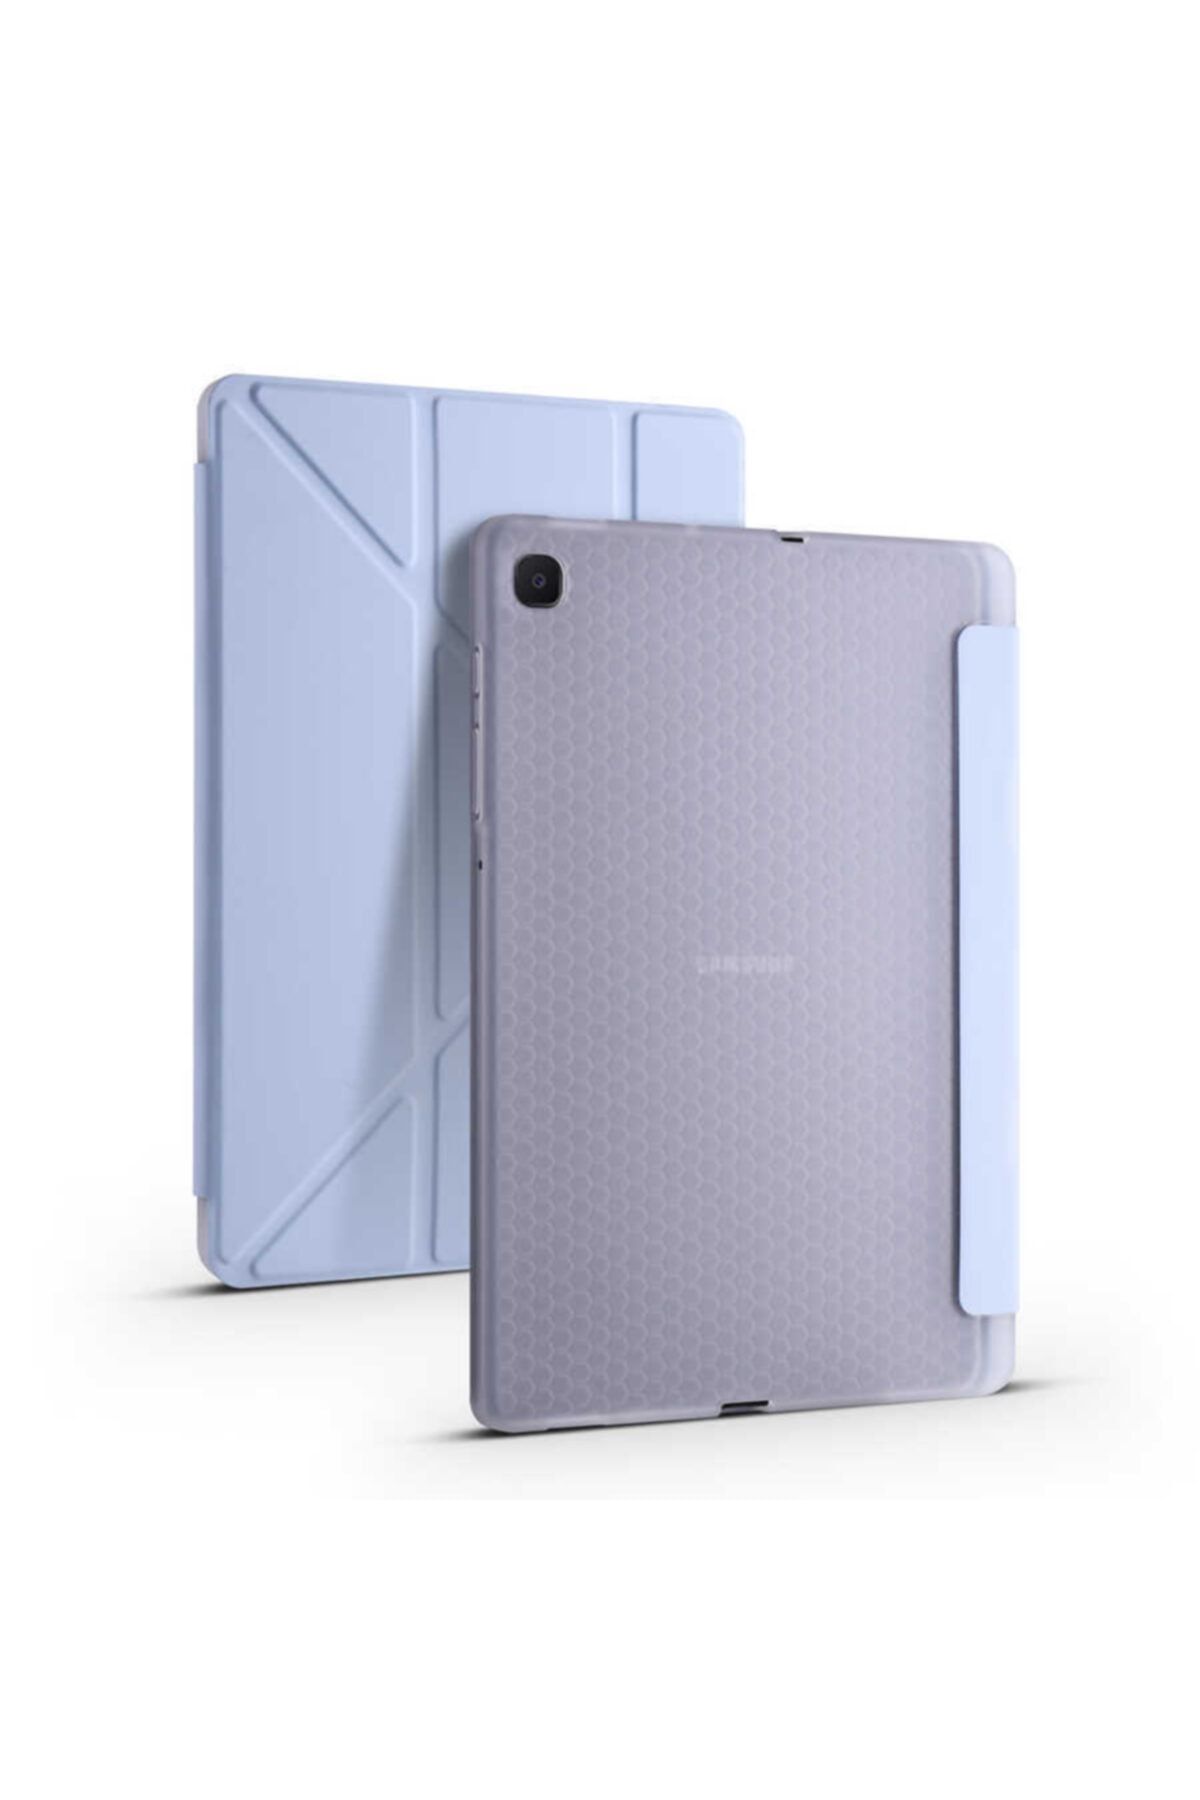 TEKNETSTORE Samsung Galaxy Tab S6 Lite Sm-p610 10.4" Kılıf Kalem Bölmeli Standlı Katlanabilir Kalemlikli Silikon